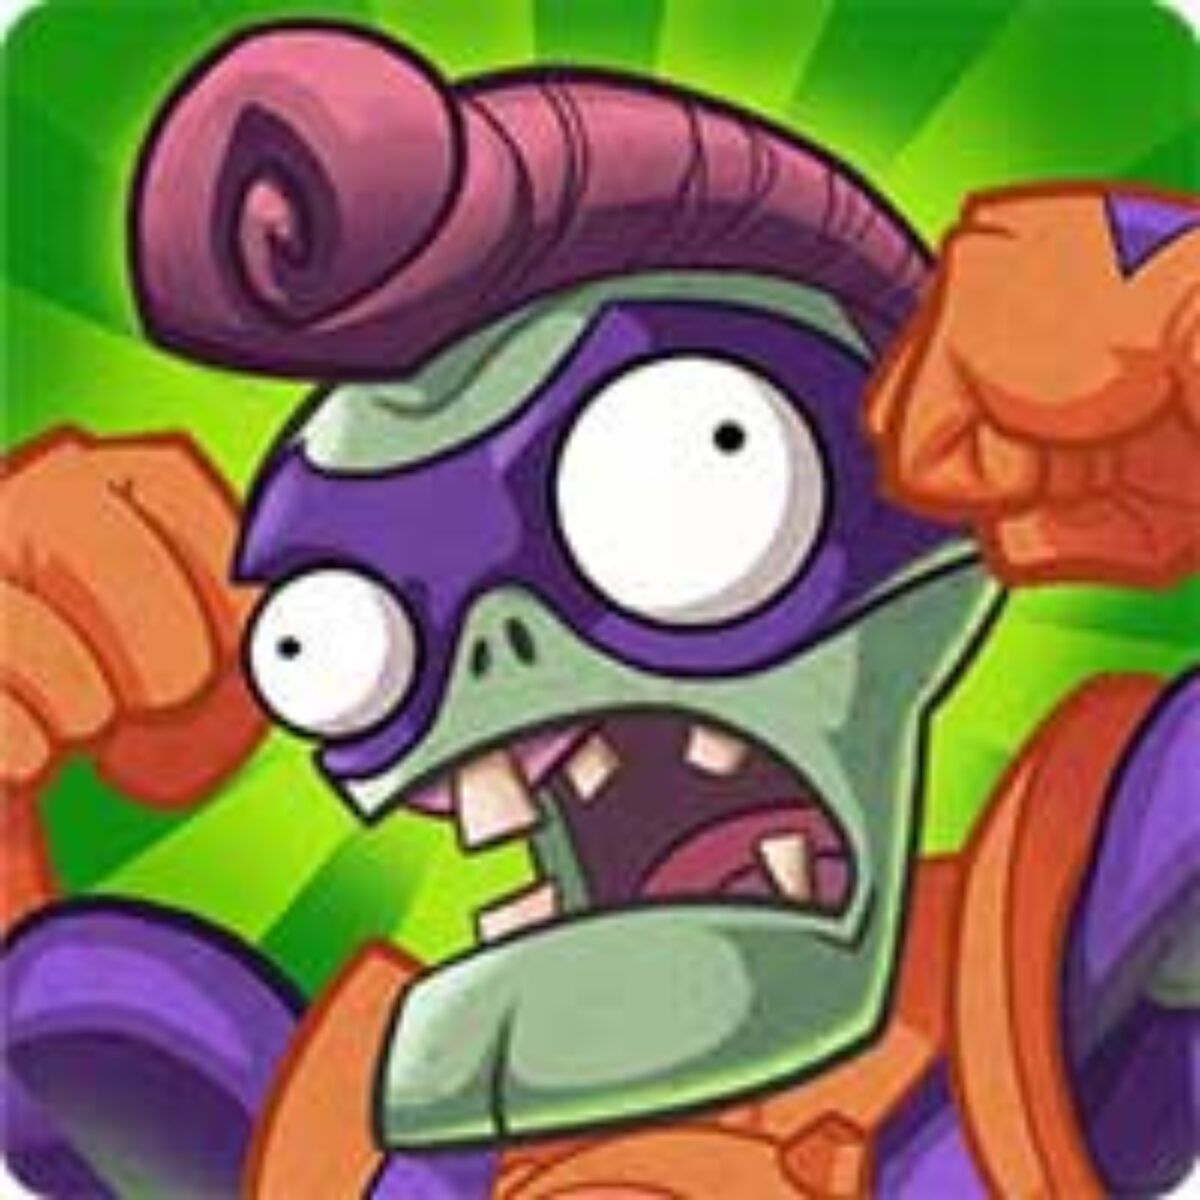 Plants vs Zombies Heroes Apk Mod Dinheiro Infinito v1.39.94 - Goku Play  Games